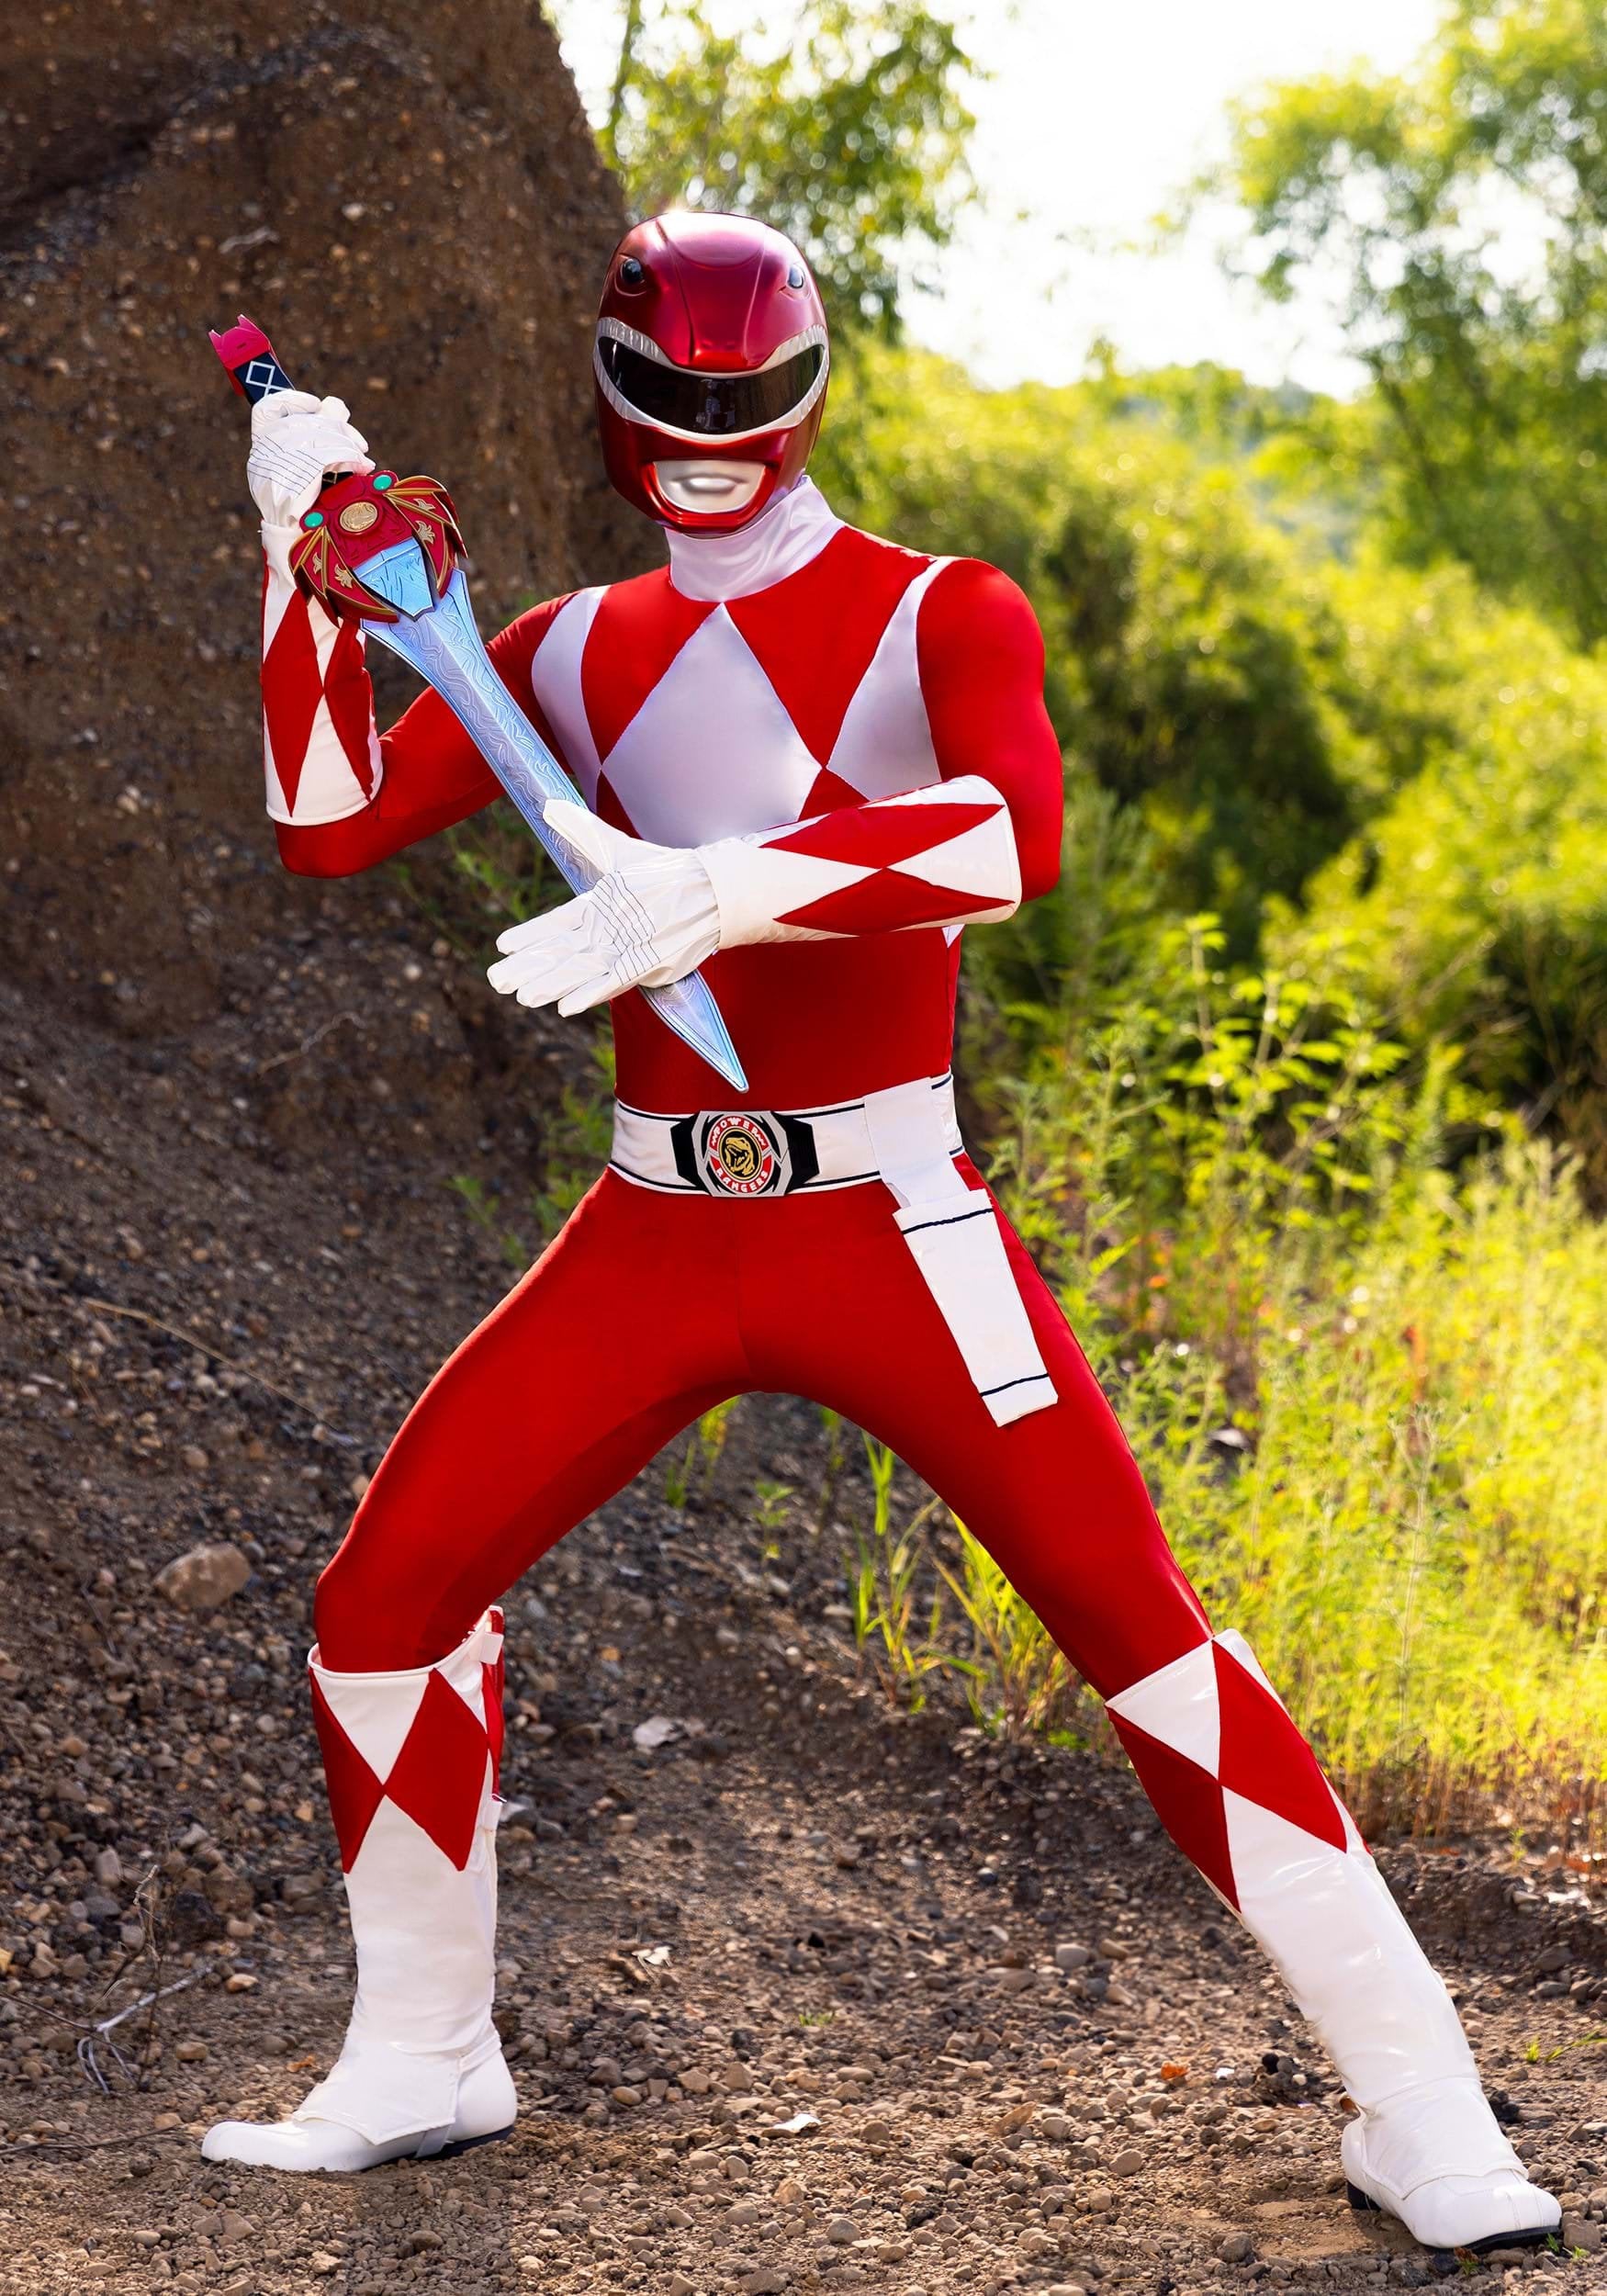 Mighty Morphin Red Power Rangers Custom Hoodie Apparel